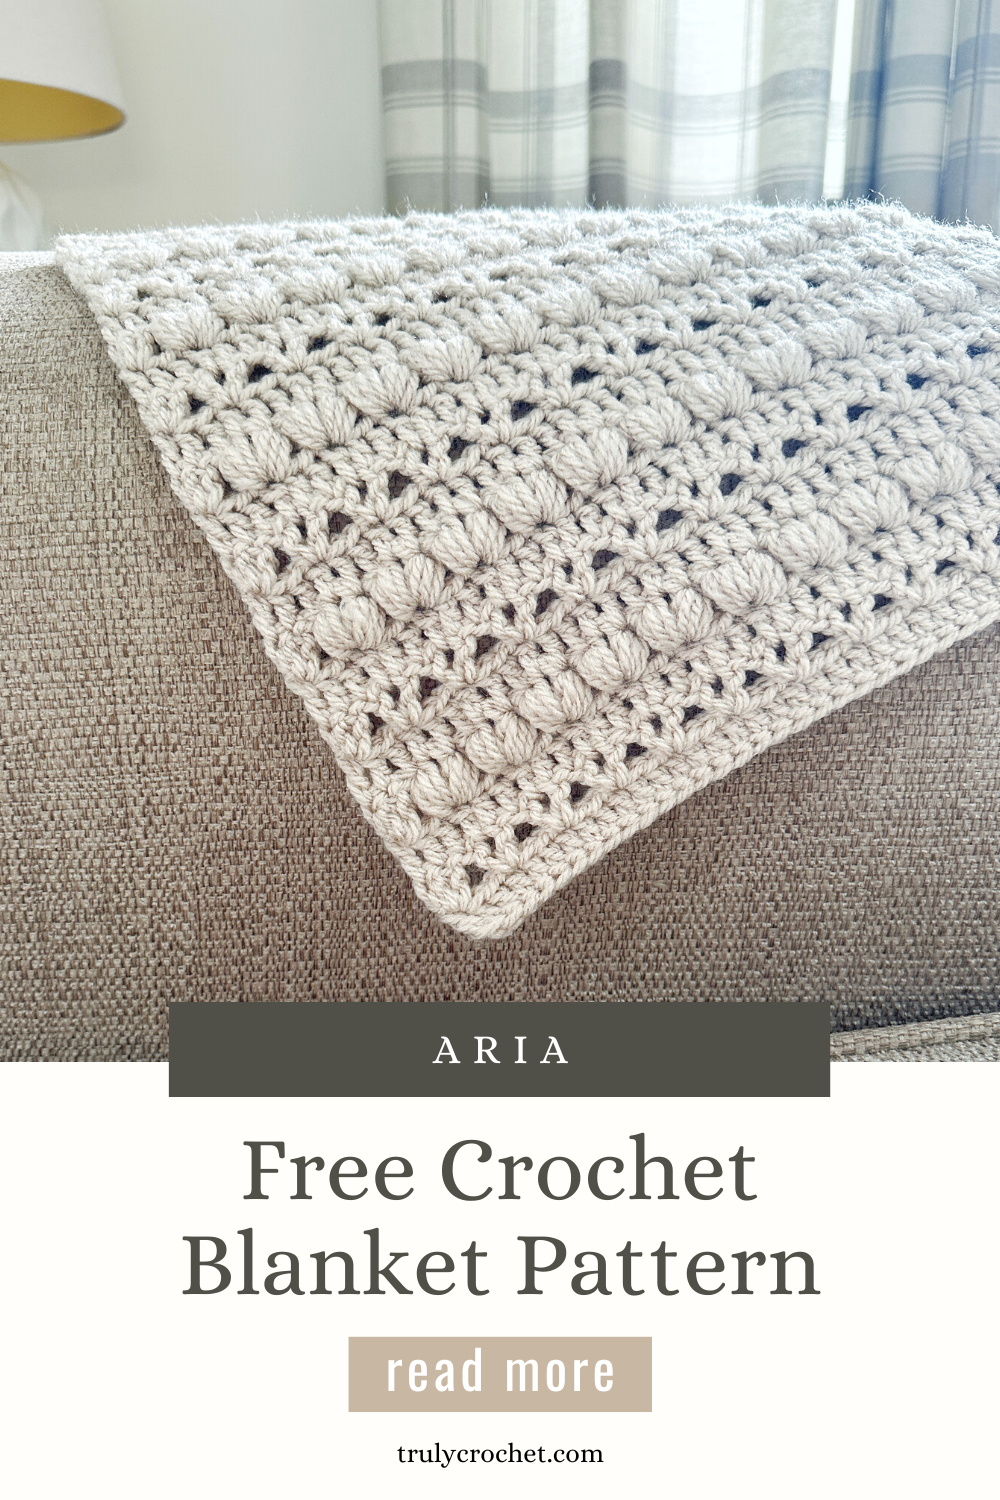 Aria Blanket - Free Crochet Pattern